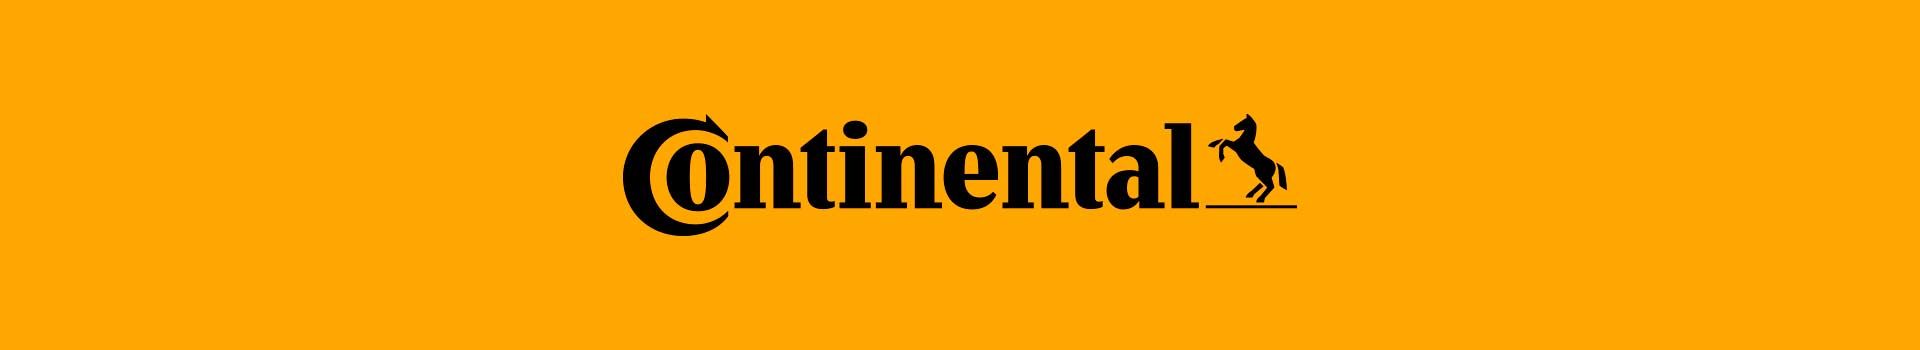 continental-banner